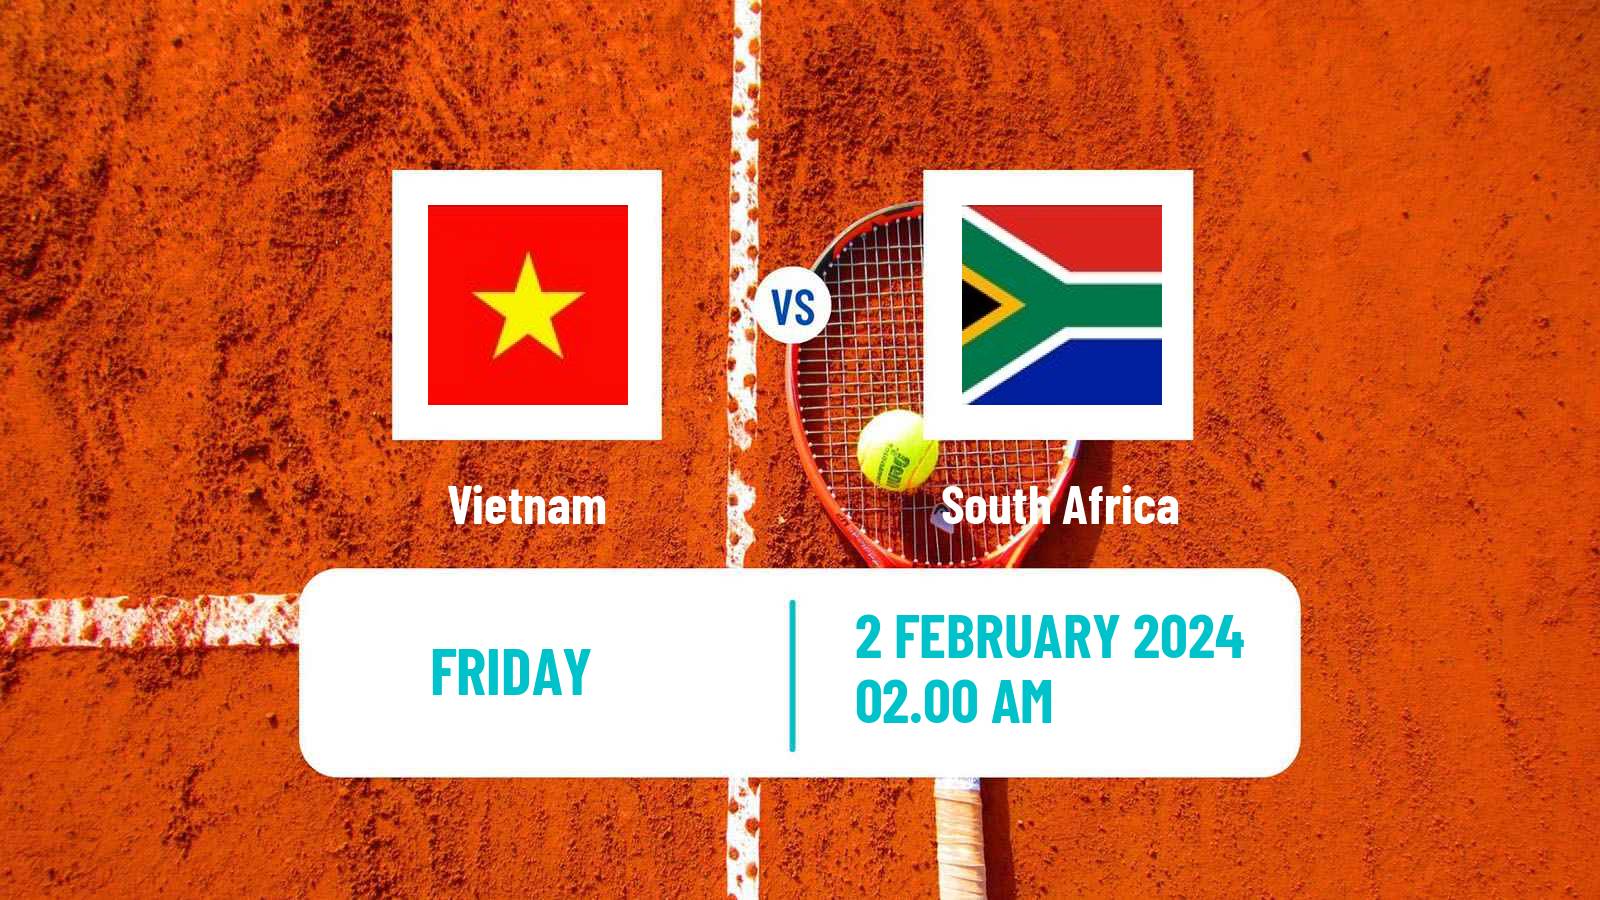 Tennis Davis Cup World Group II Teams Vietnam - South Africa